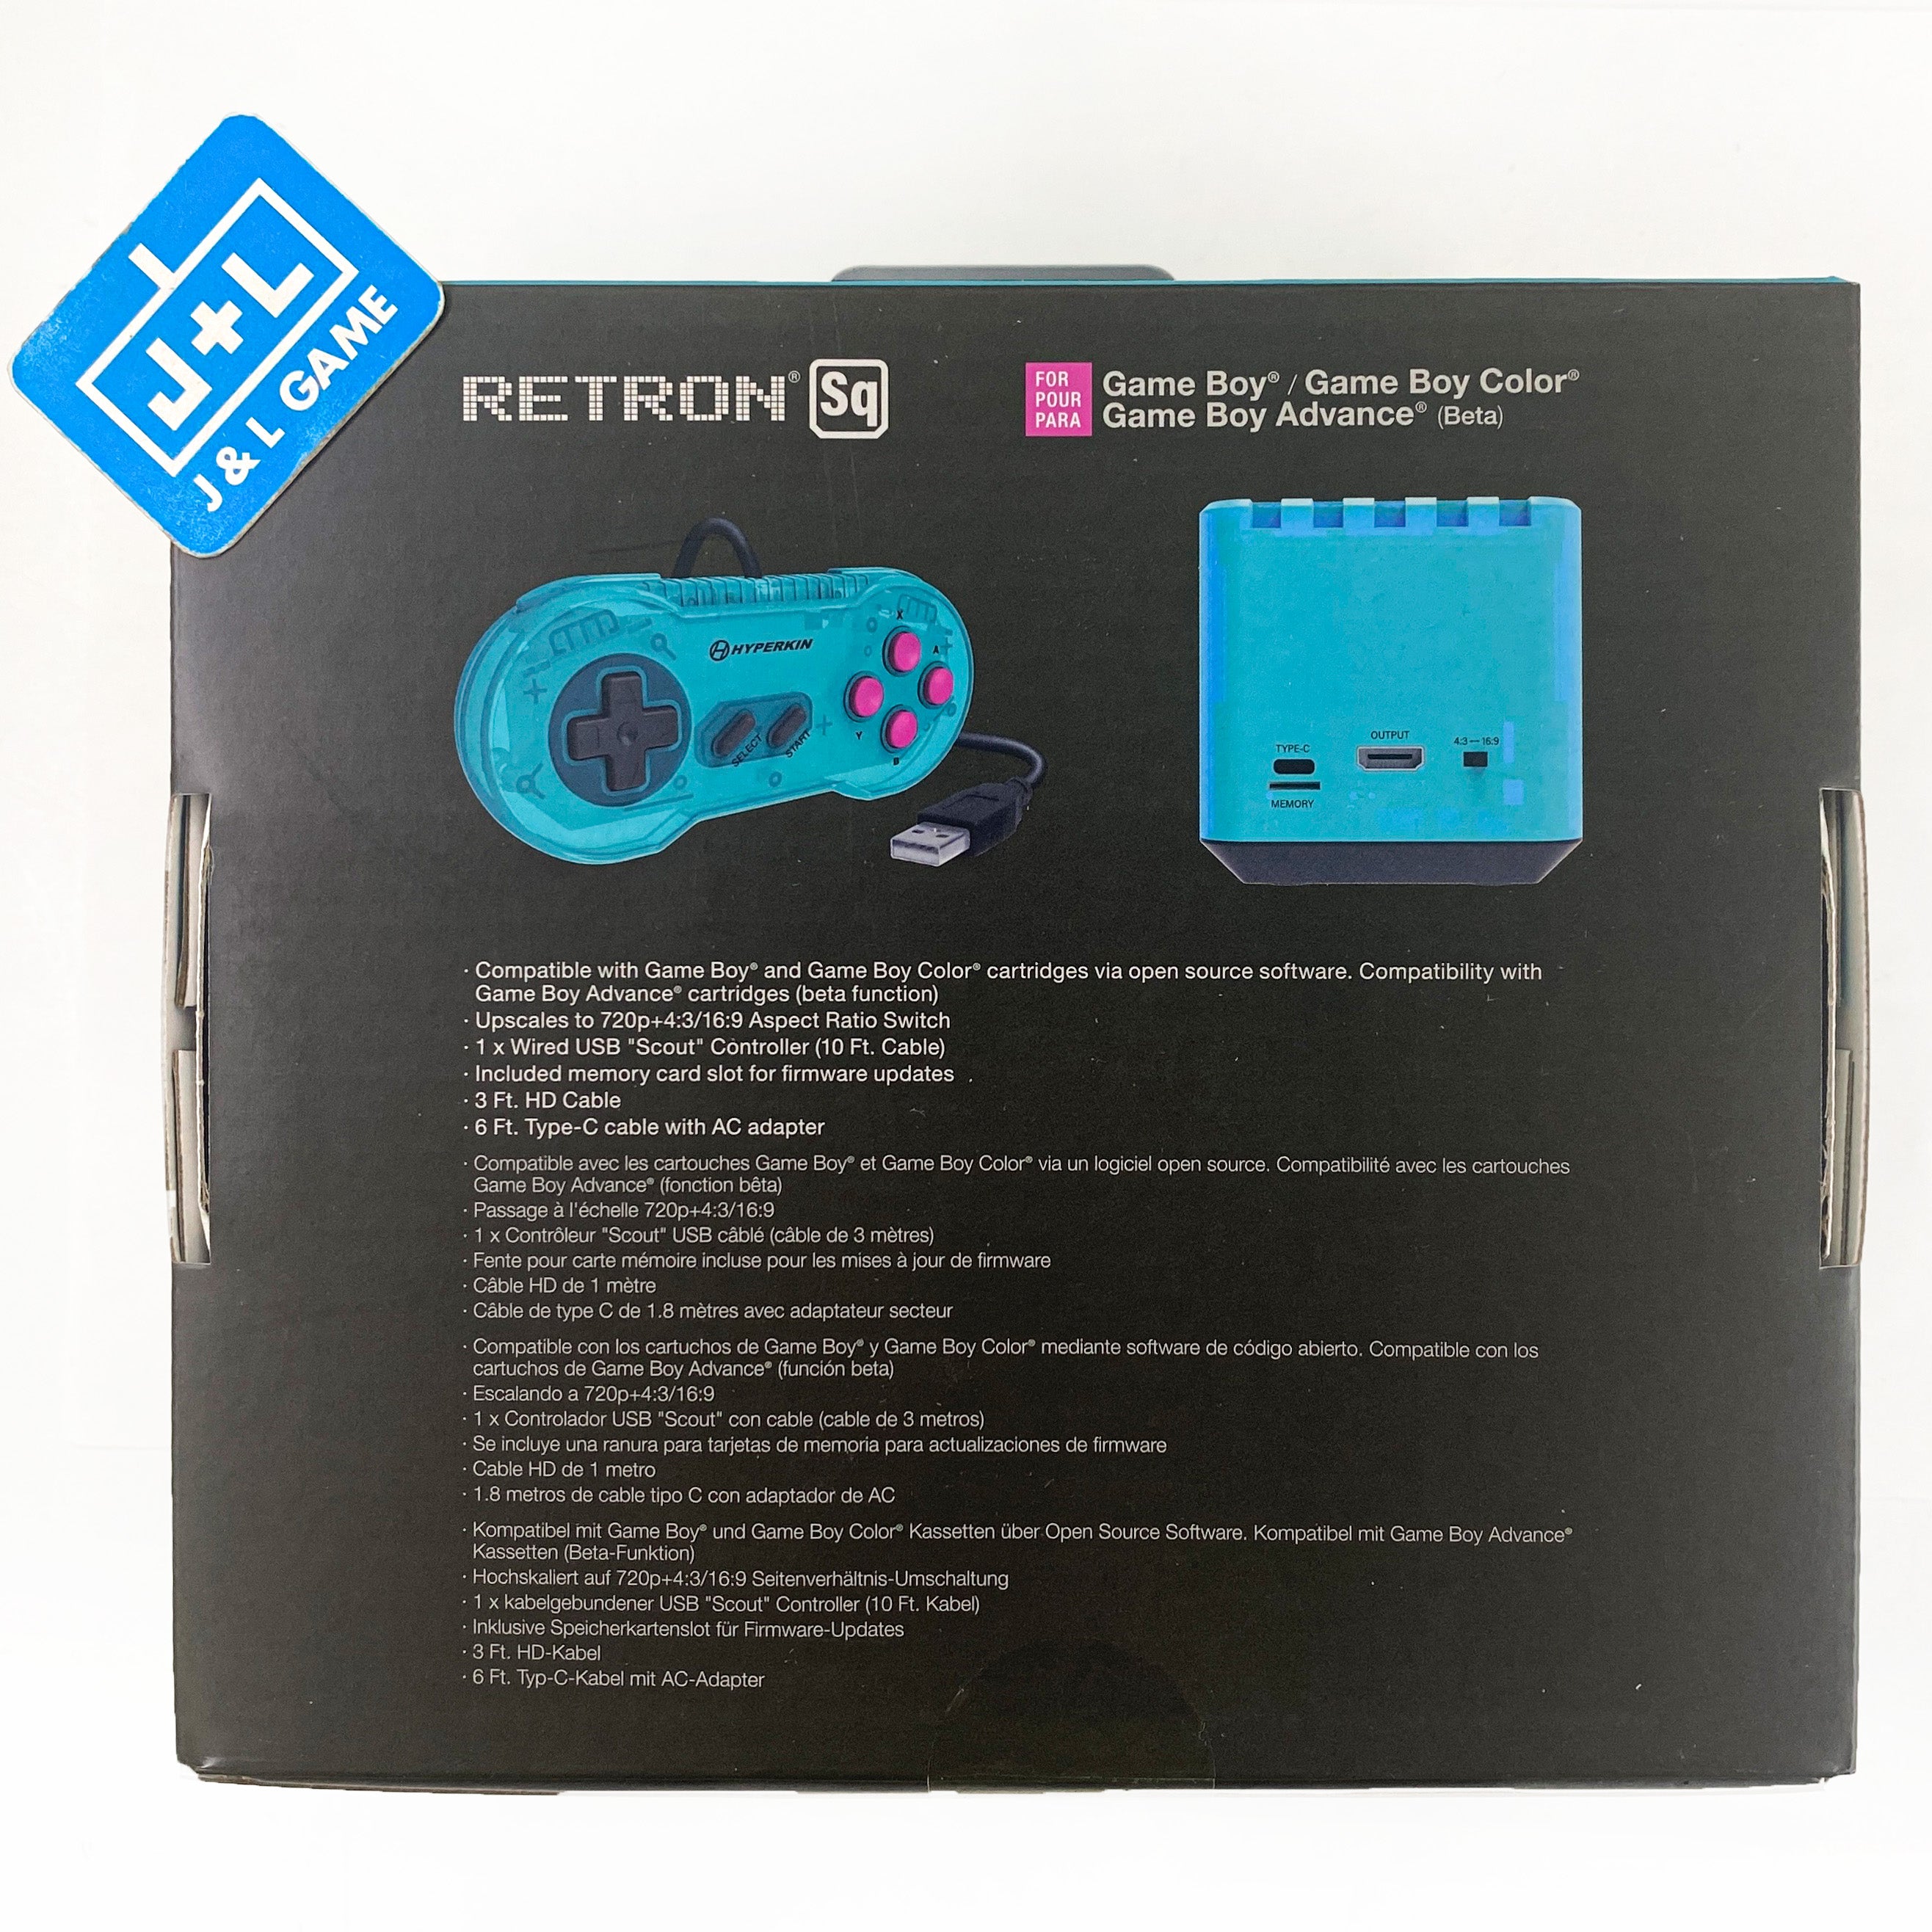 Hyperkin RetroN Sq: HD Gaming Console for Game Boy/Color/ Game Boy Advance (Hyper Beach) - Game Boy Advance CONSOLE Hyperkin   